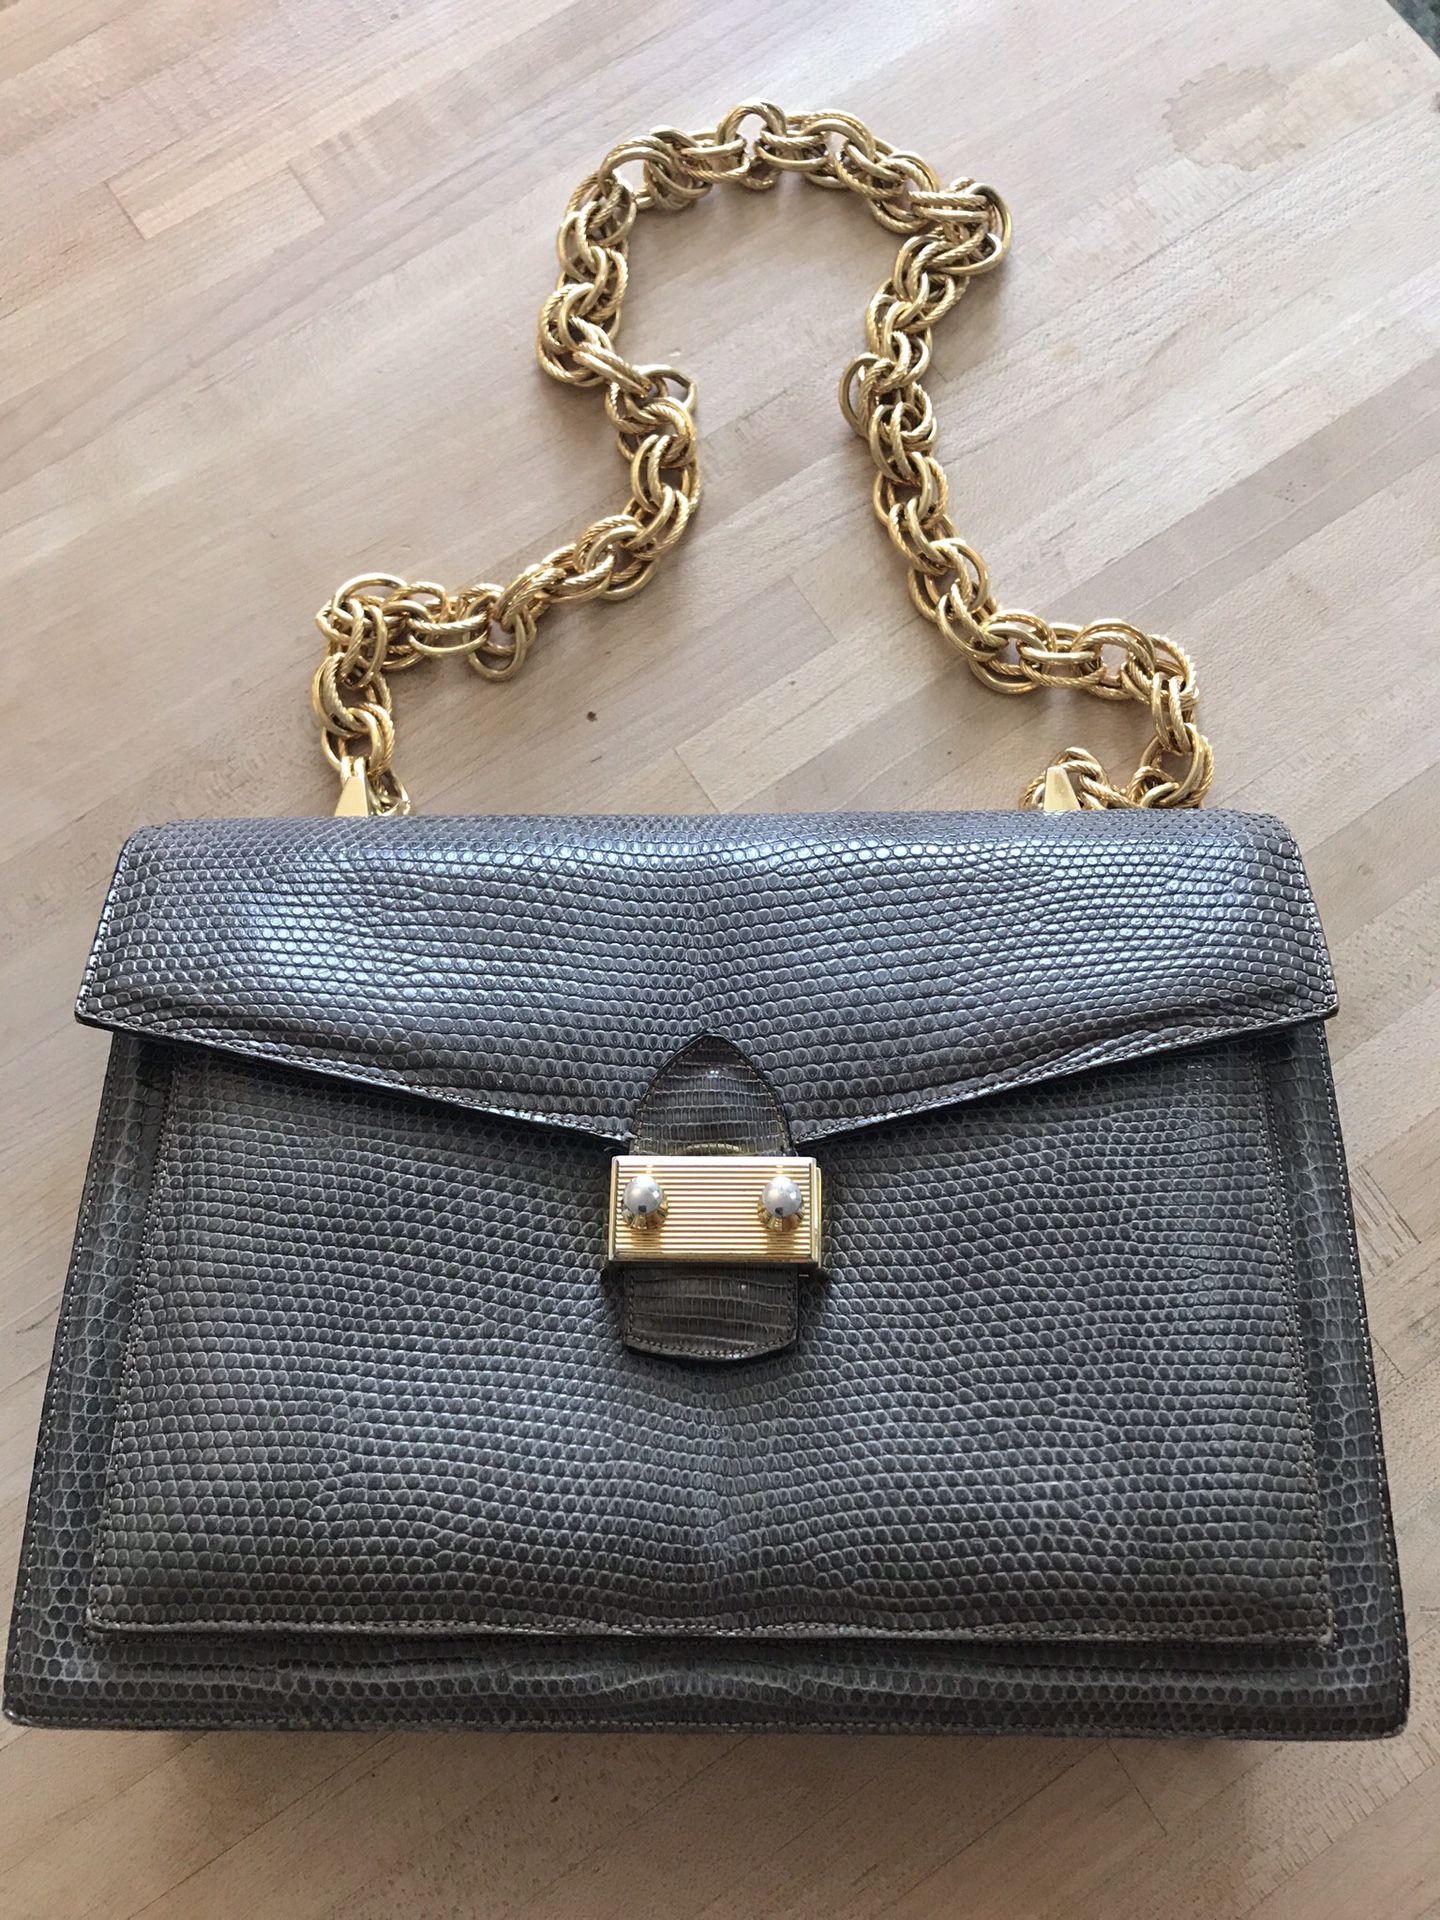 Finesse brand faux snake skin purse w heavy gold chain